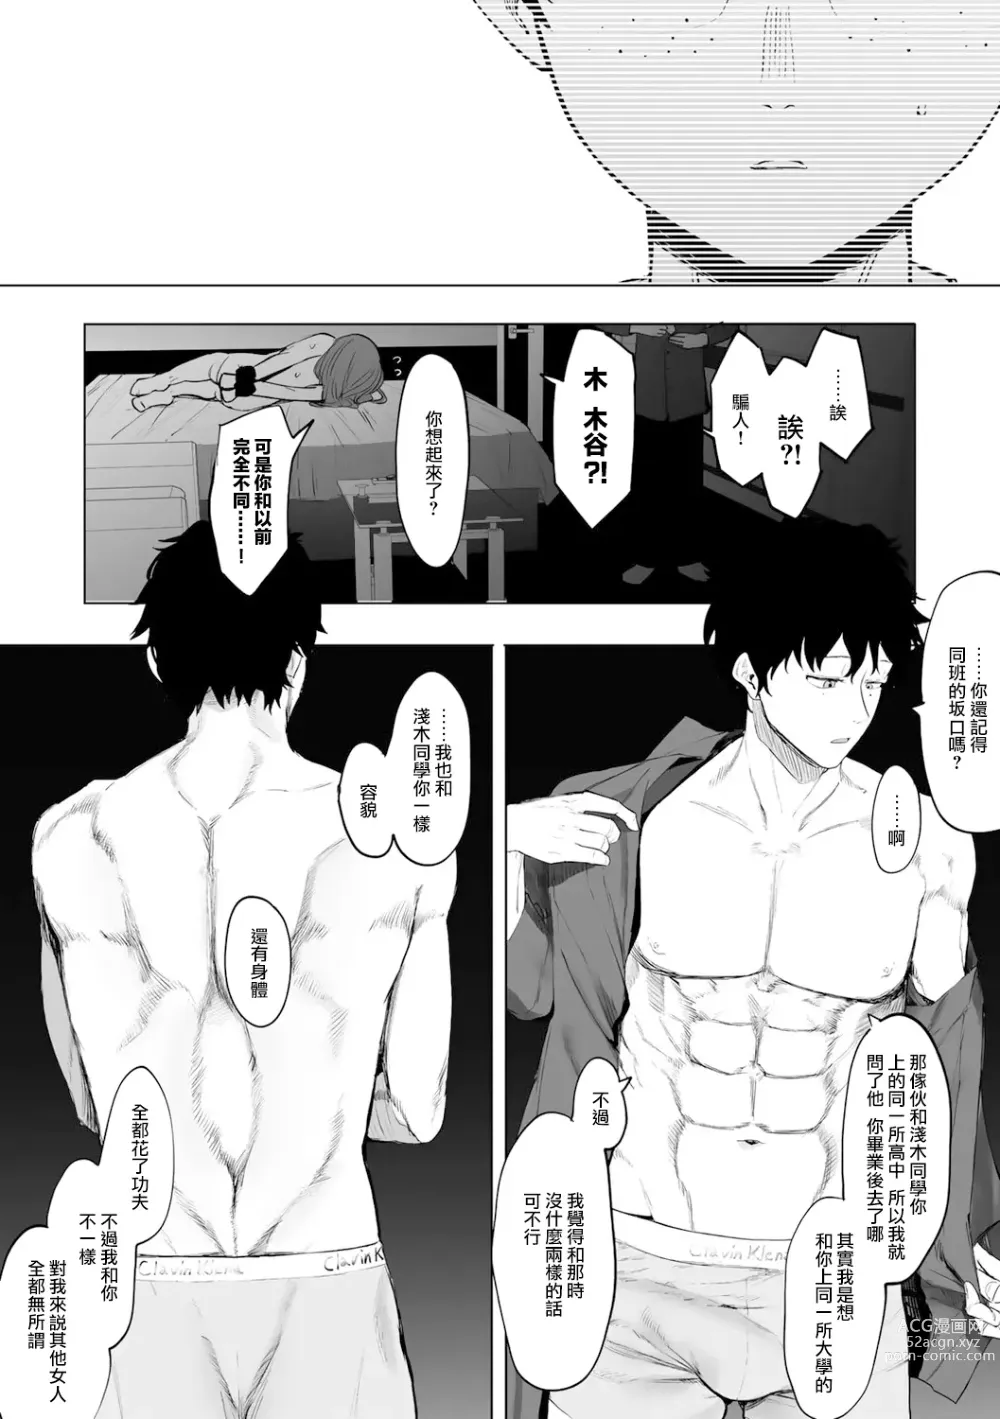 Page 11 of manga 都内/JD/优质110